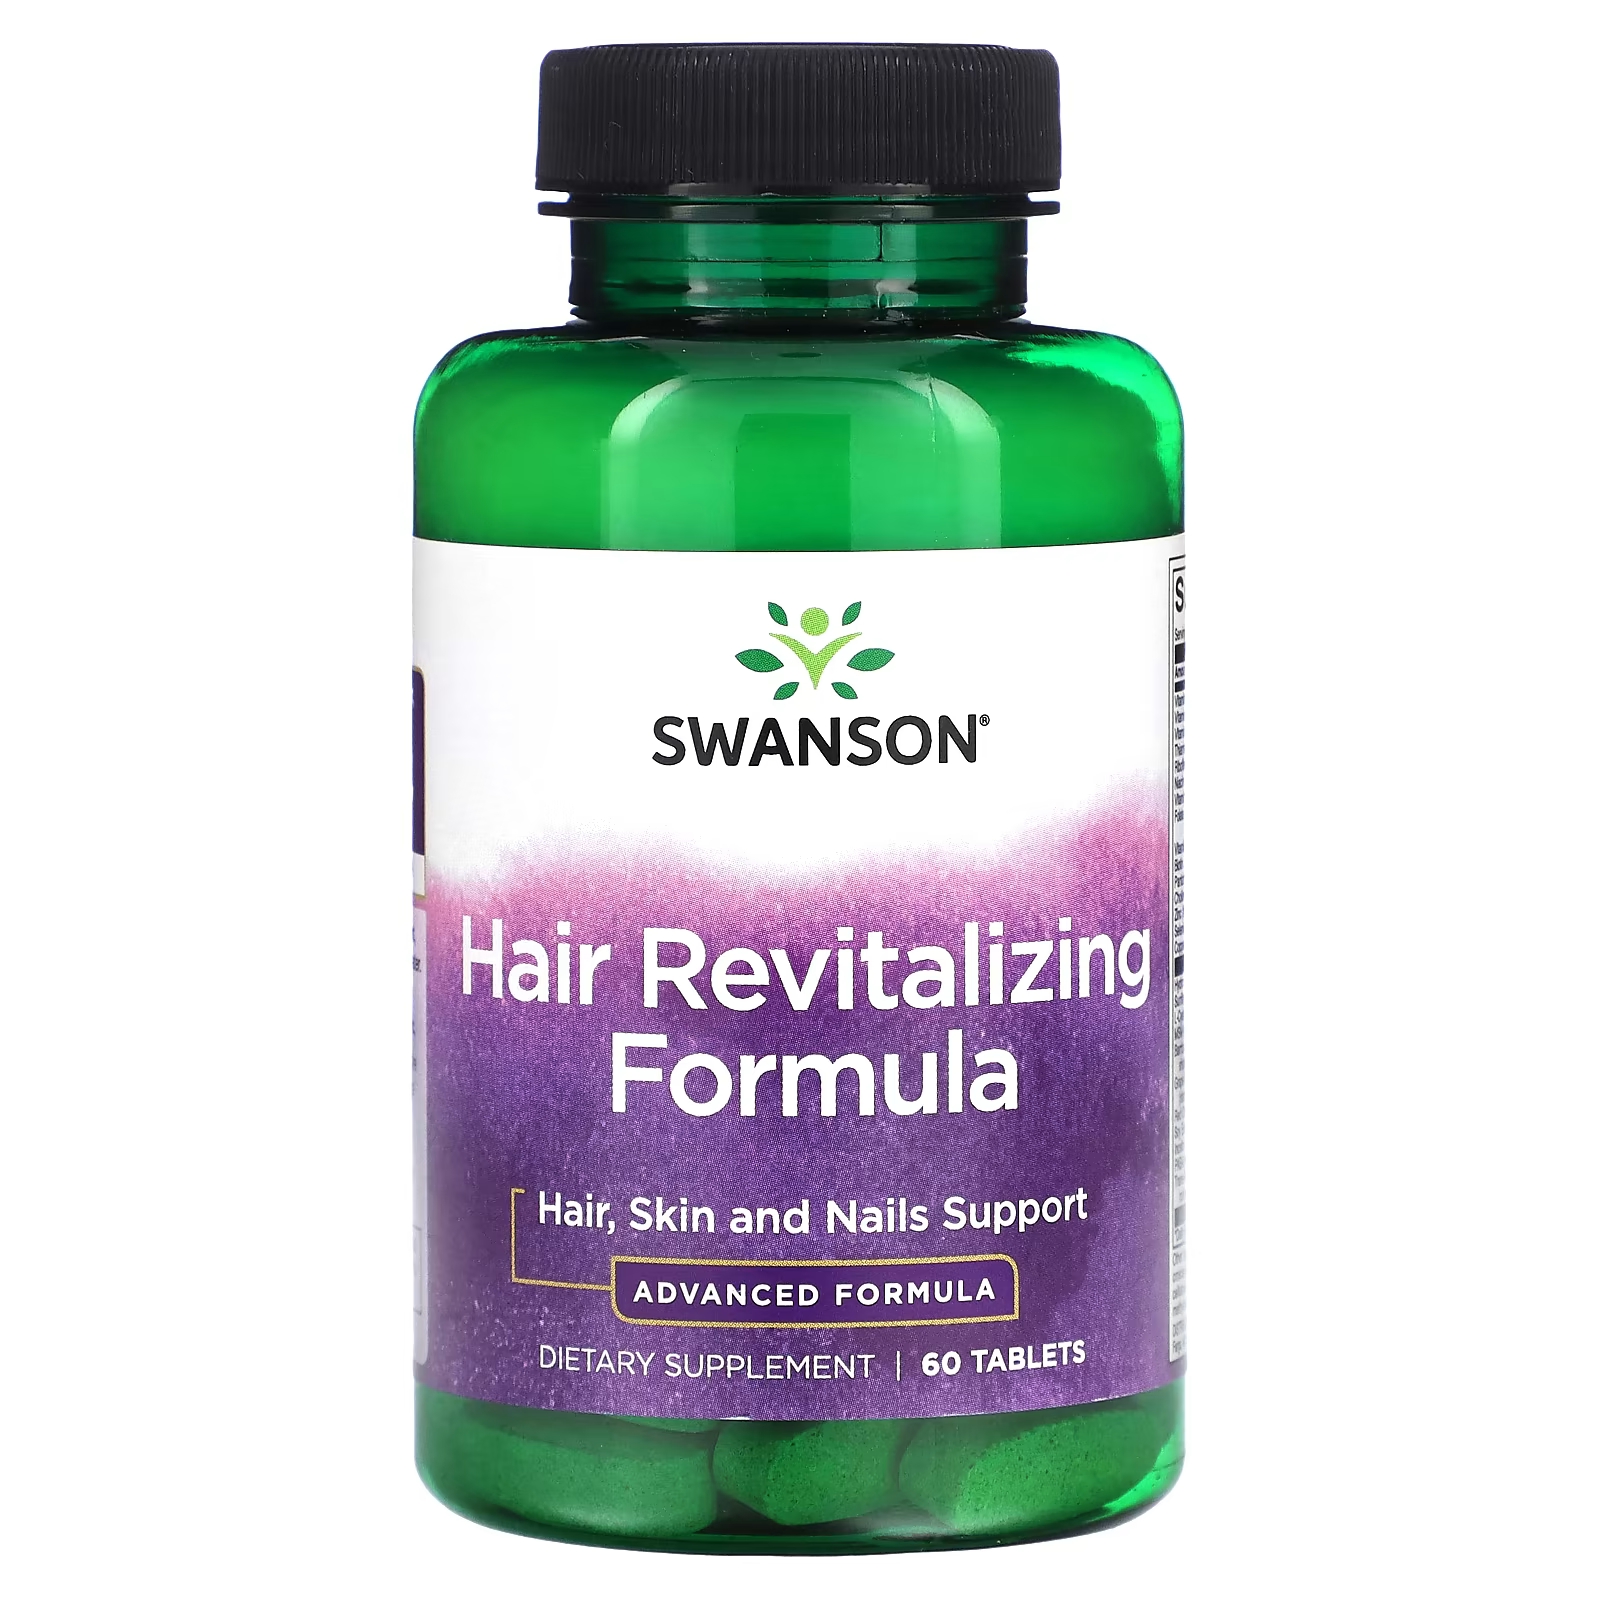 Пищевая добавка Swanson Формула для восстановления волос, 60 таблеток